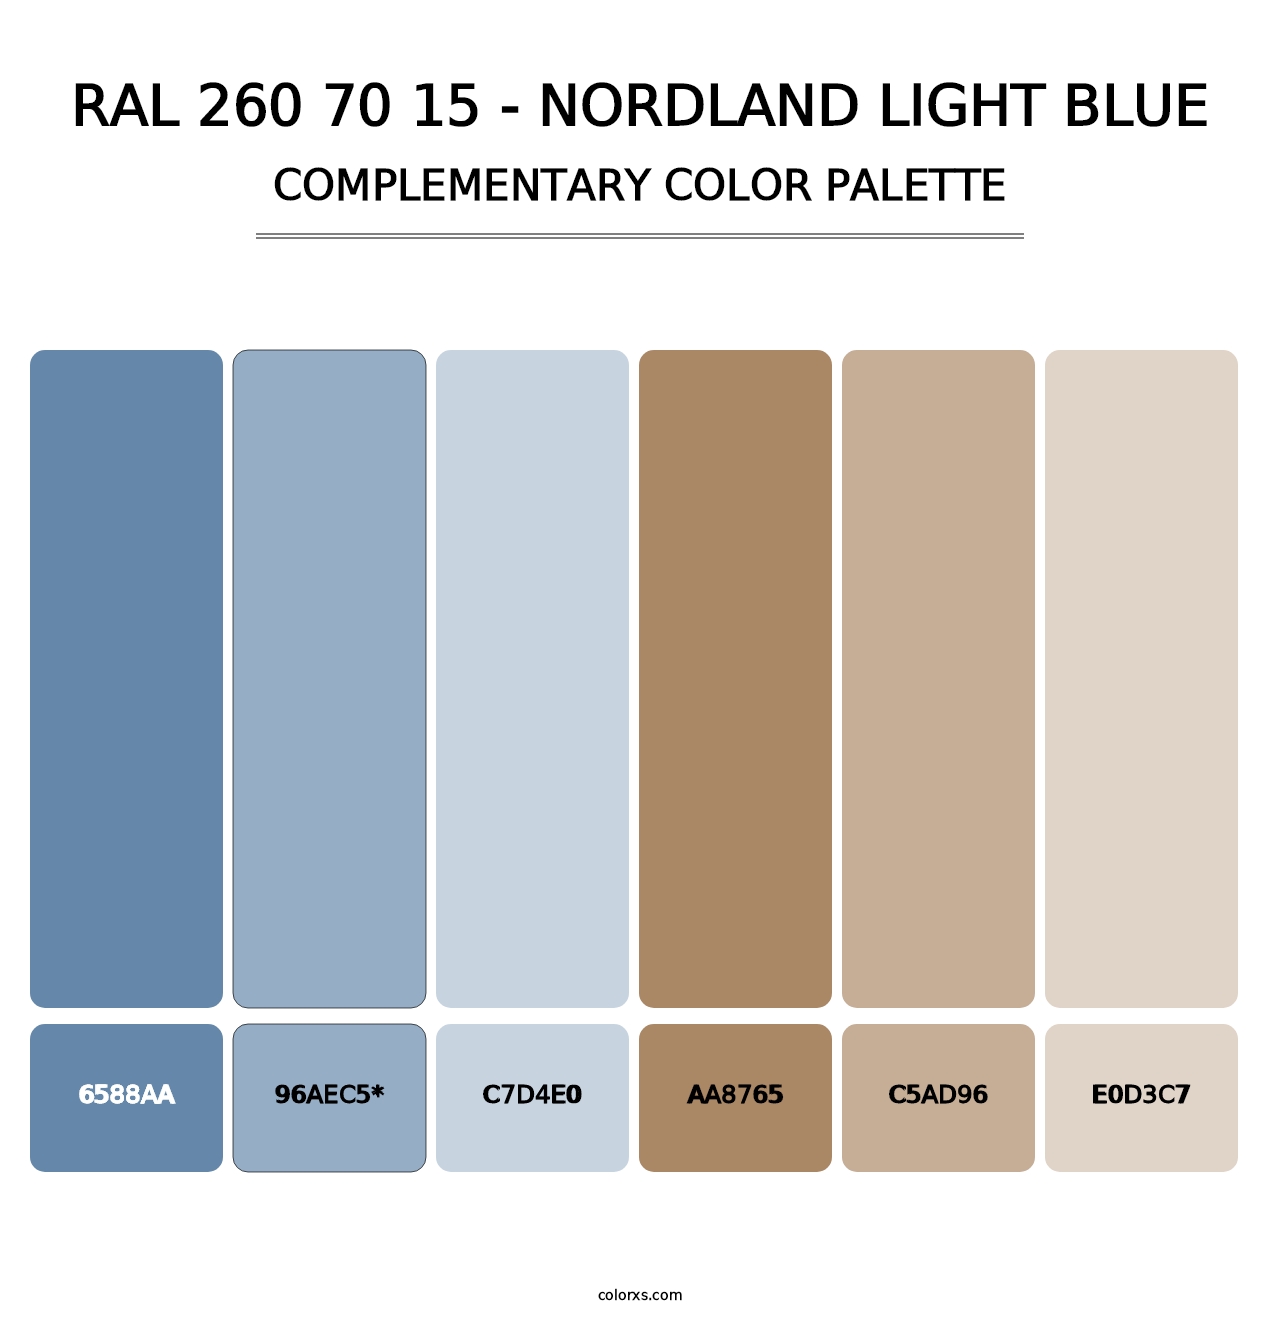 RAL 260 70 15 - Nordland Light Blue - Complementary Color Palette